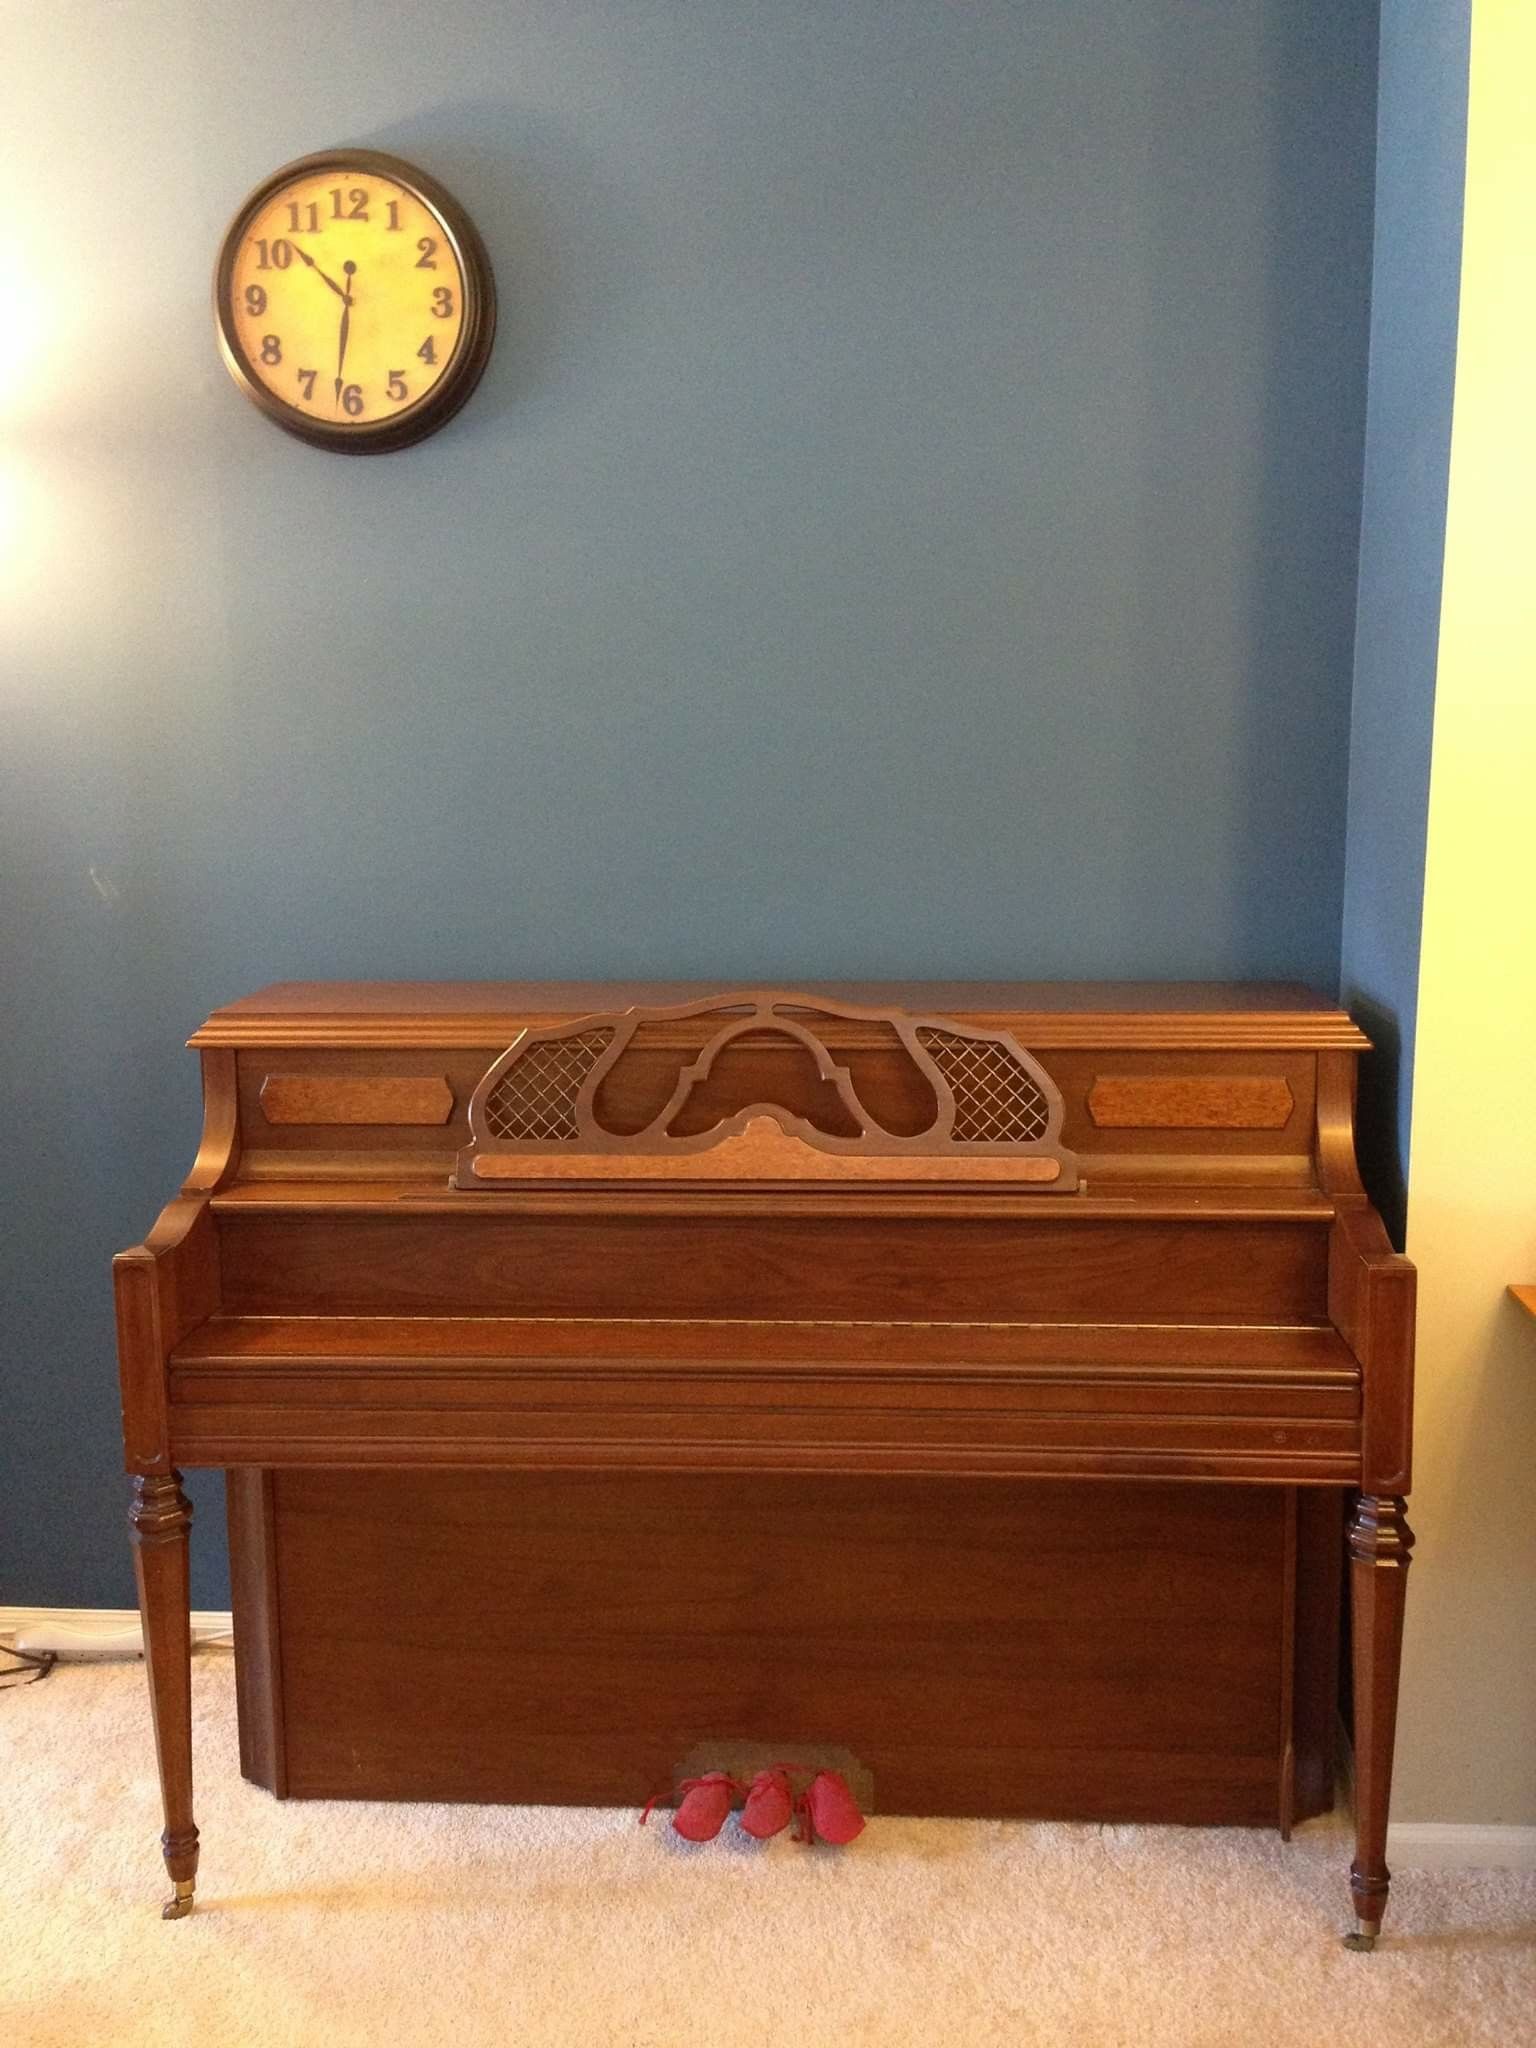 Old school piano